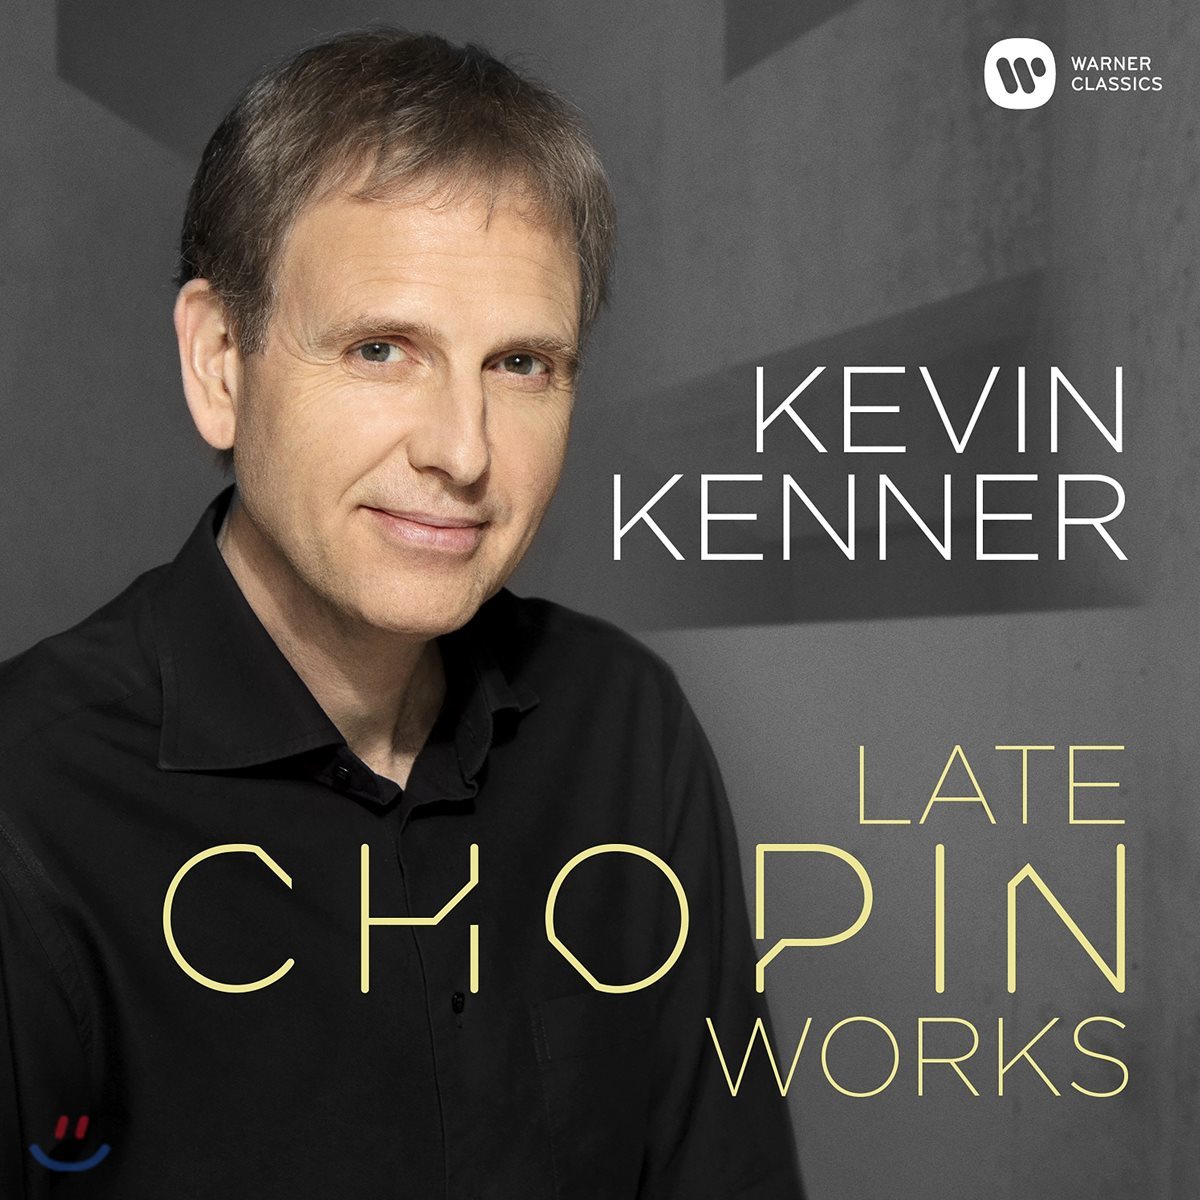 Kevin Kenner 쇼팽 후기 작품집 (Late Chopin Works)